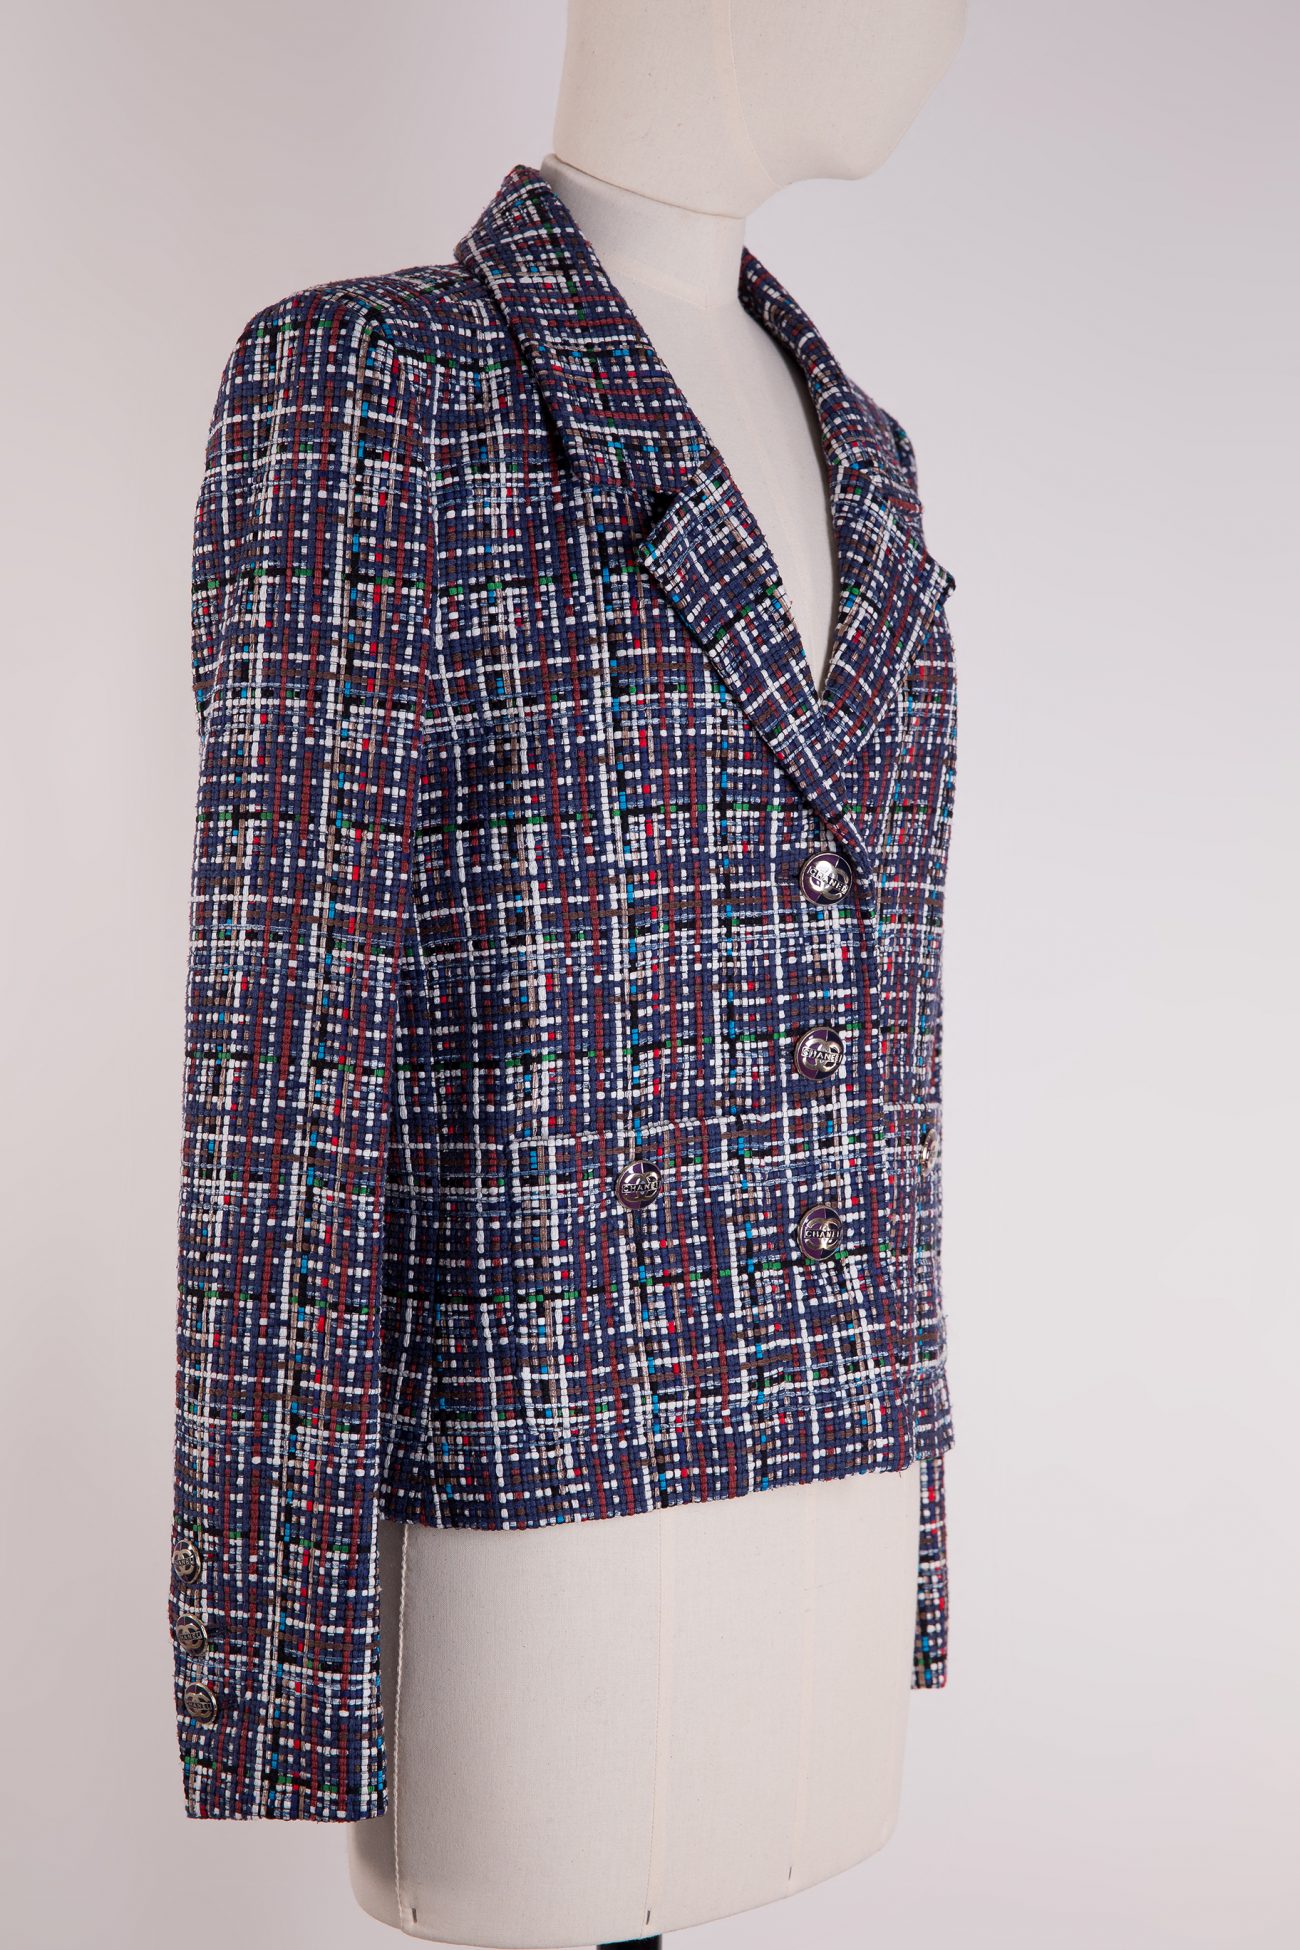 Louis Vuitton Dress, FR34 - Huntessa Luxury Online Consignment Boutique